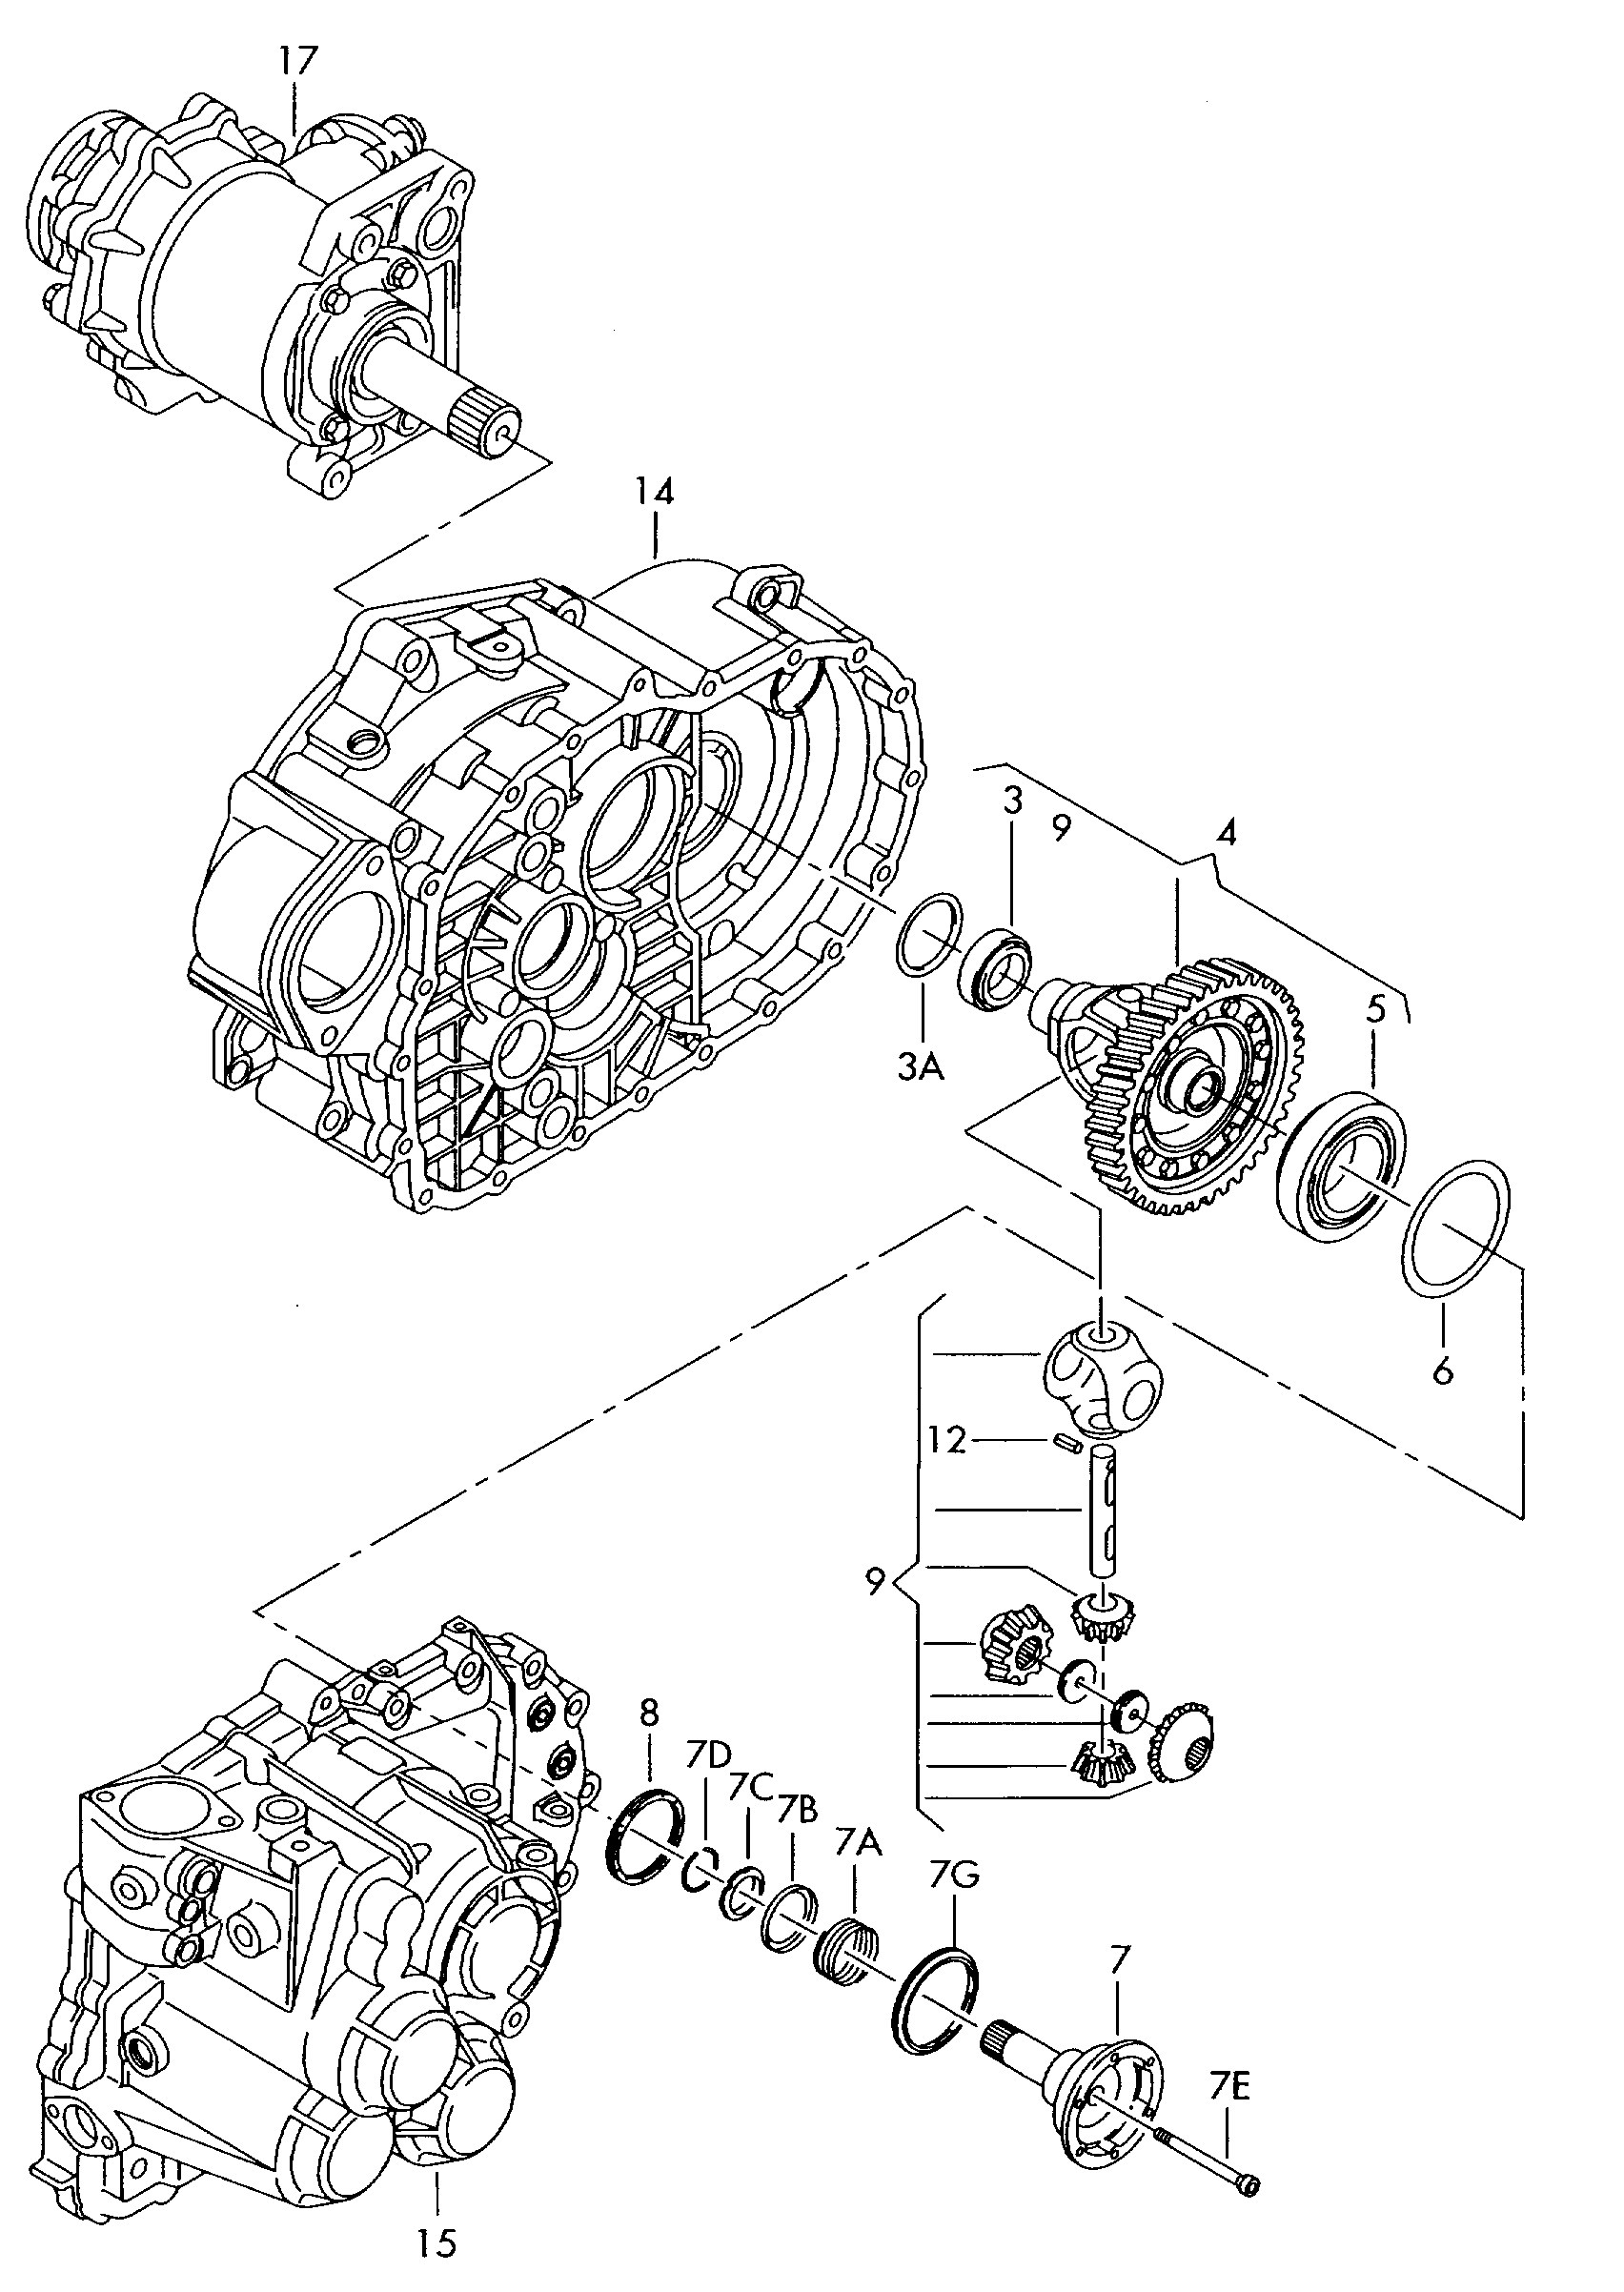 Boitier de differentielpignon de sortieBoite mecanique 6 vitessespour transmission integrale  - Sharan/syncro/4Motion - sha